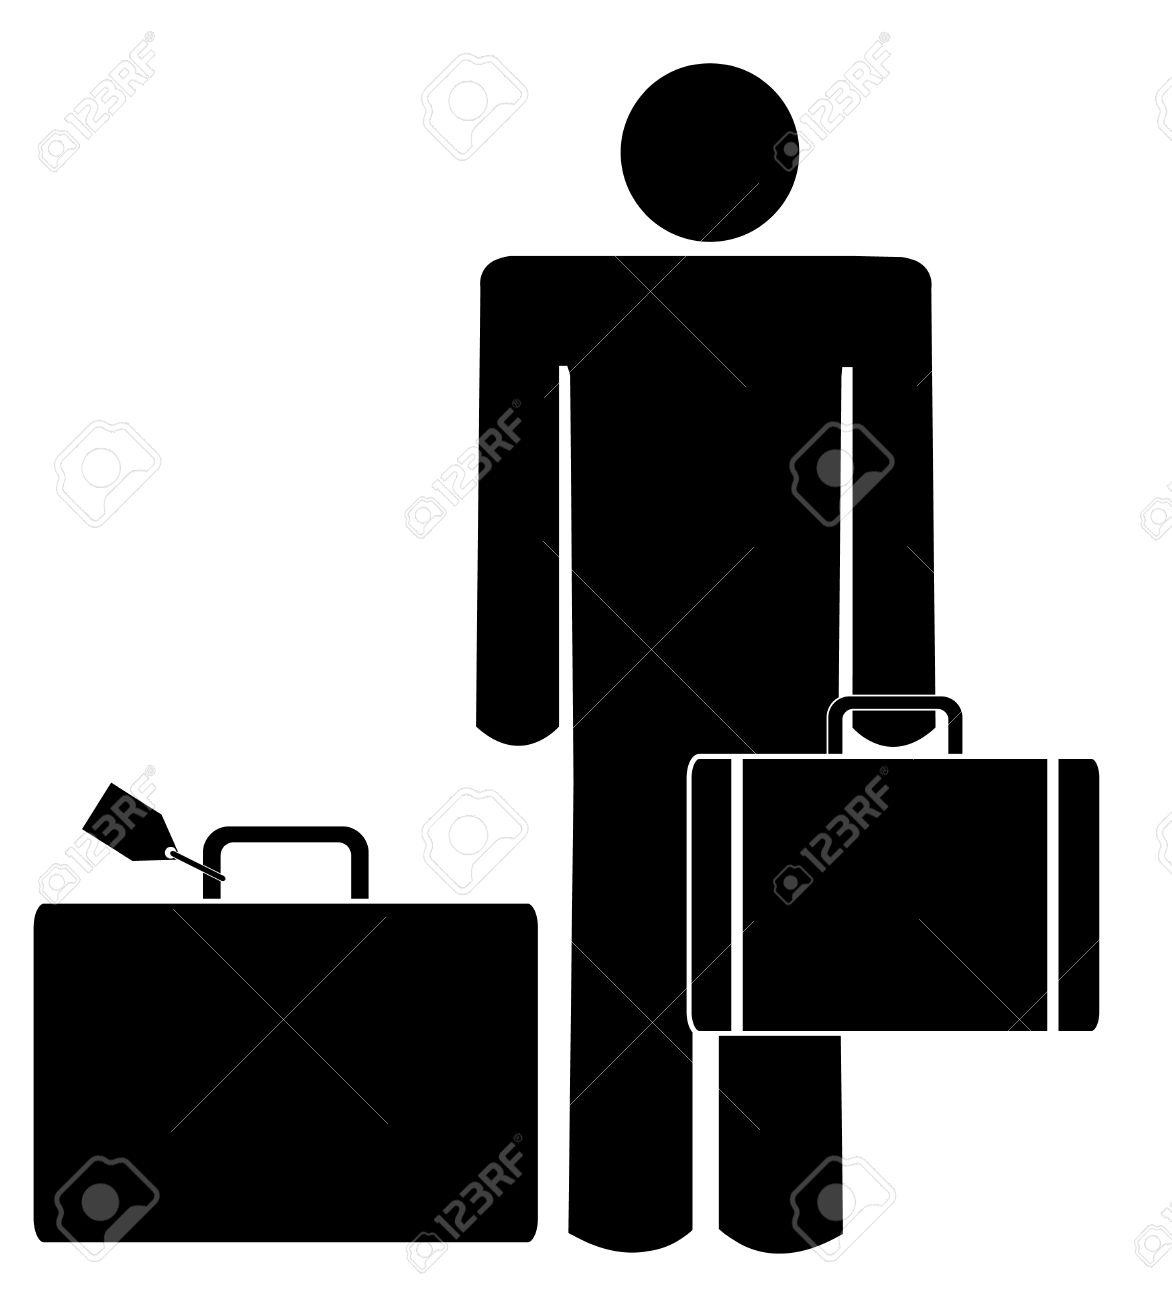 Suitcase man clipart logo more